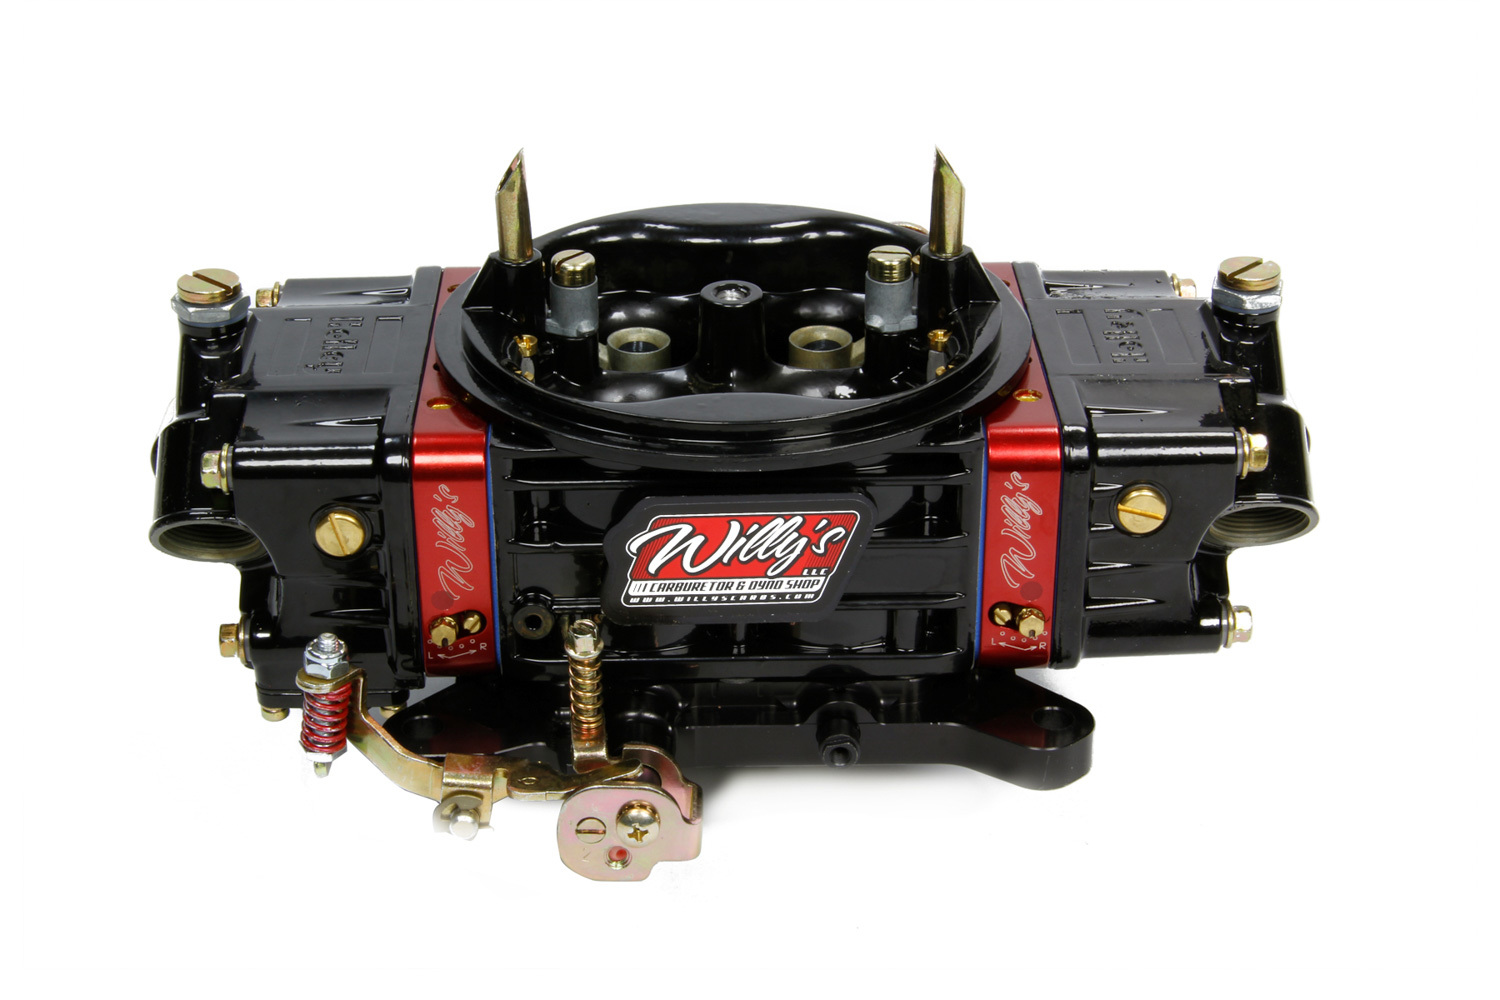 Willys Carb 64002 Carburetor, Circle Track, 4-Barrel, 750 CFM, Square Bore, No Choke, Mechanical Secondary, Dual Inlet, Black Powder Coat, Each